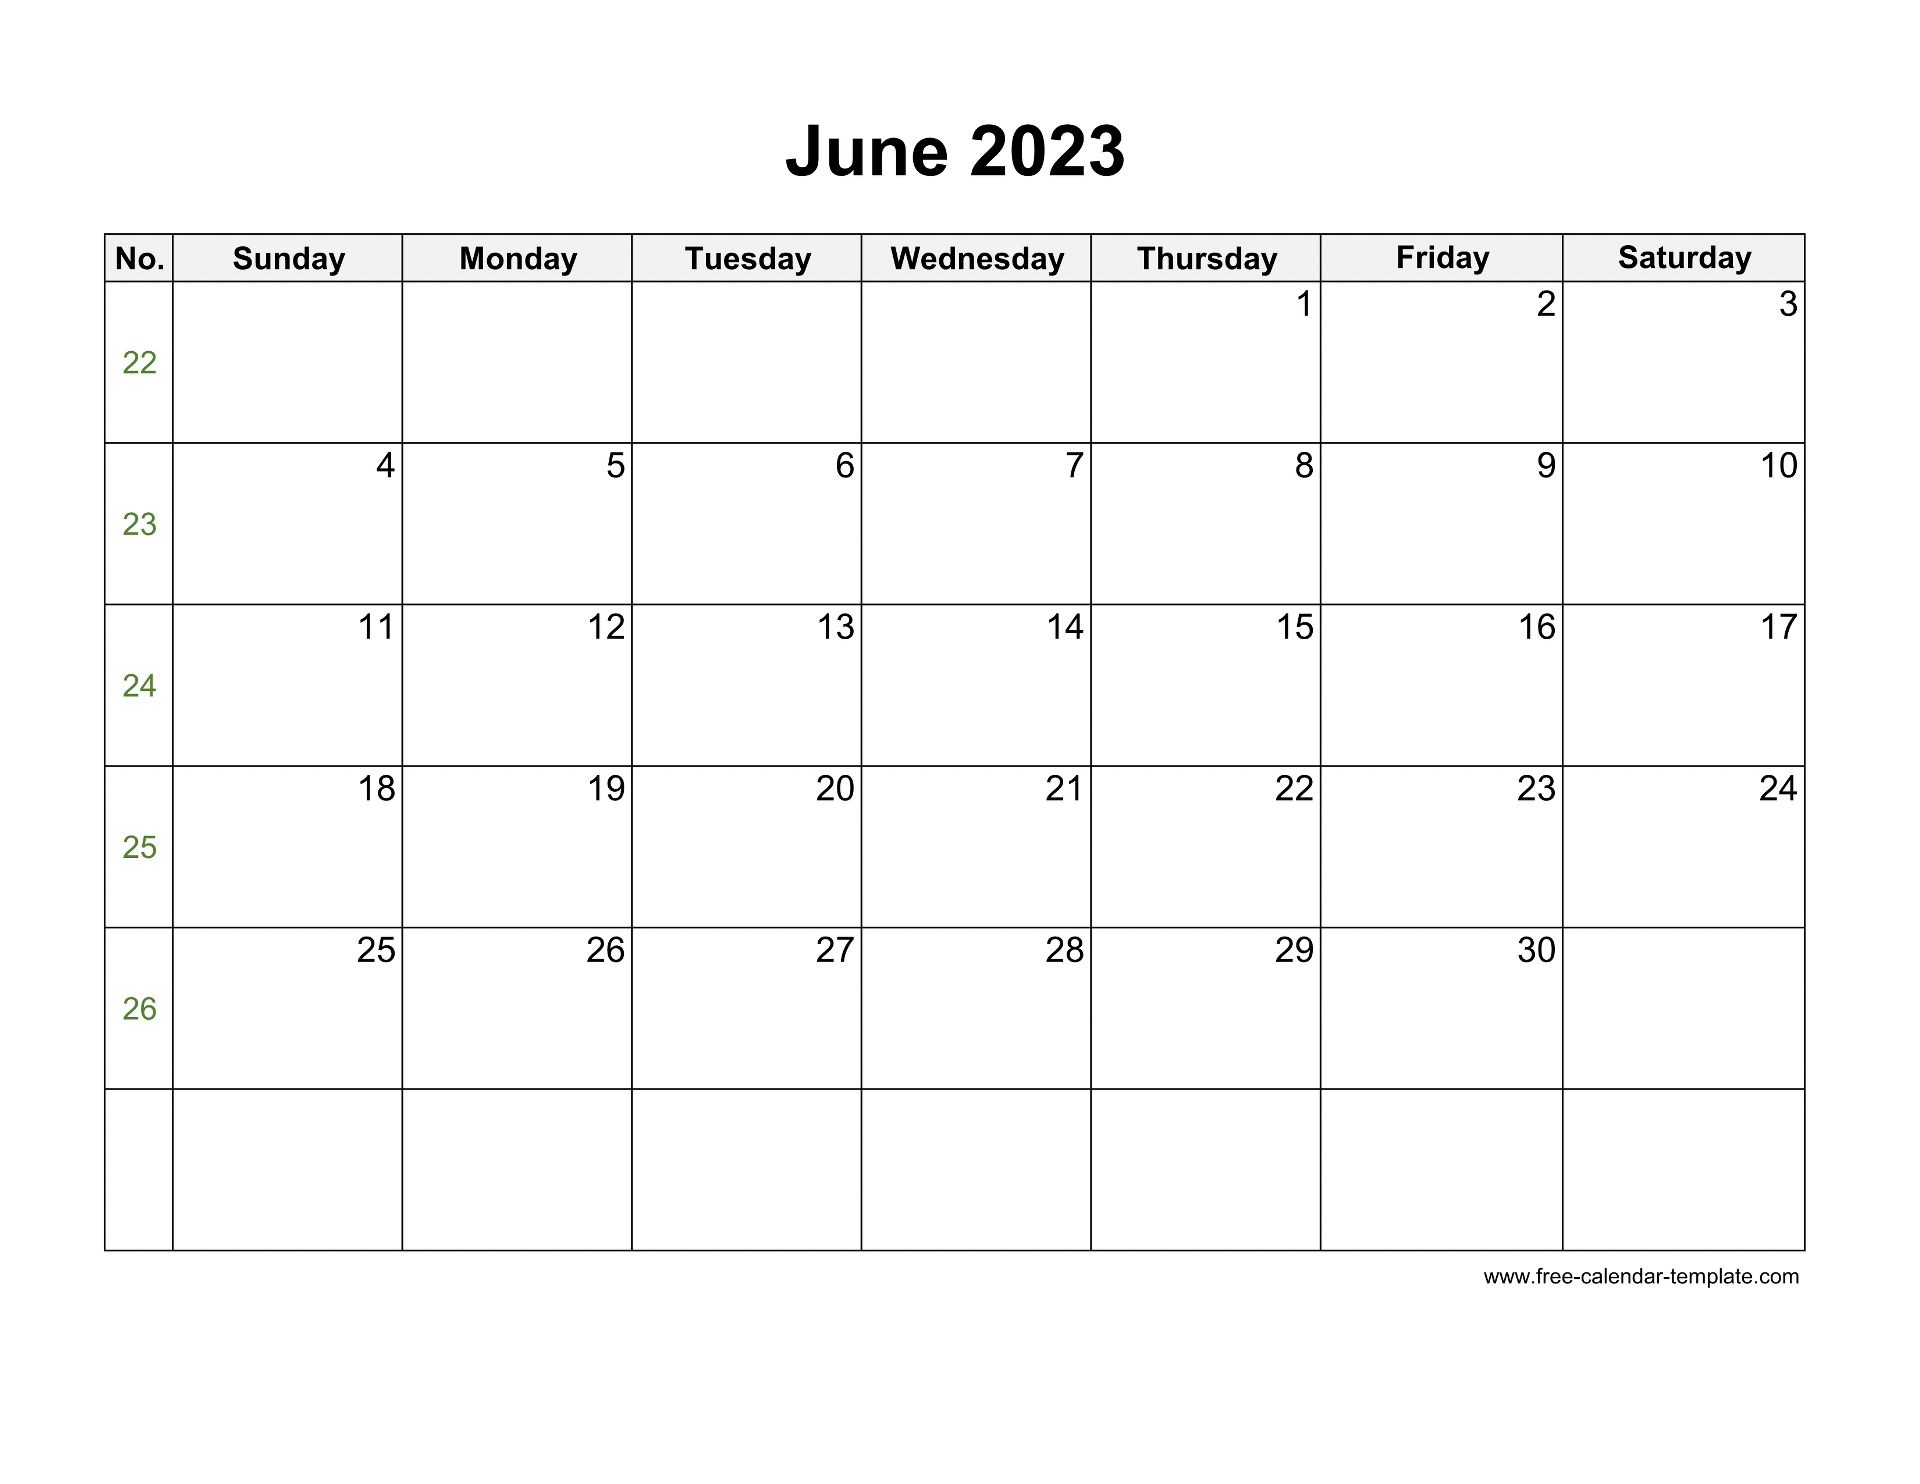 calendario-2023-word-editable-june-imagesee